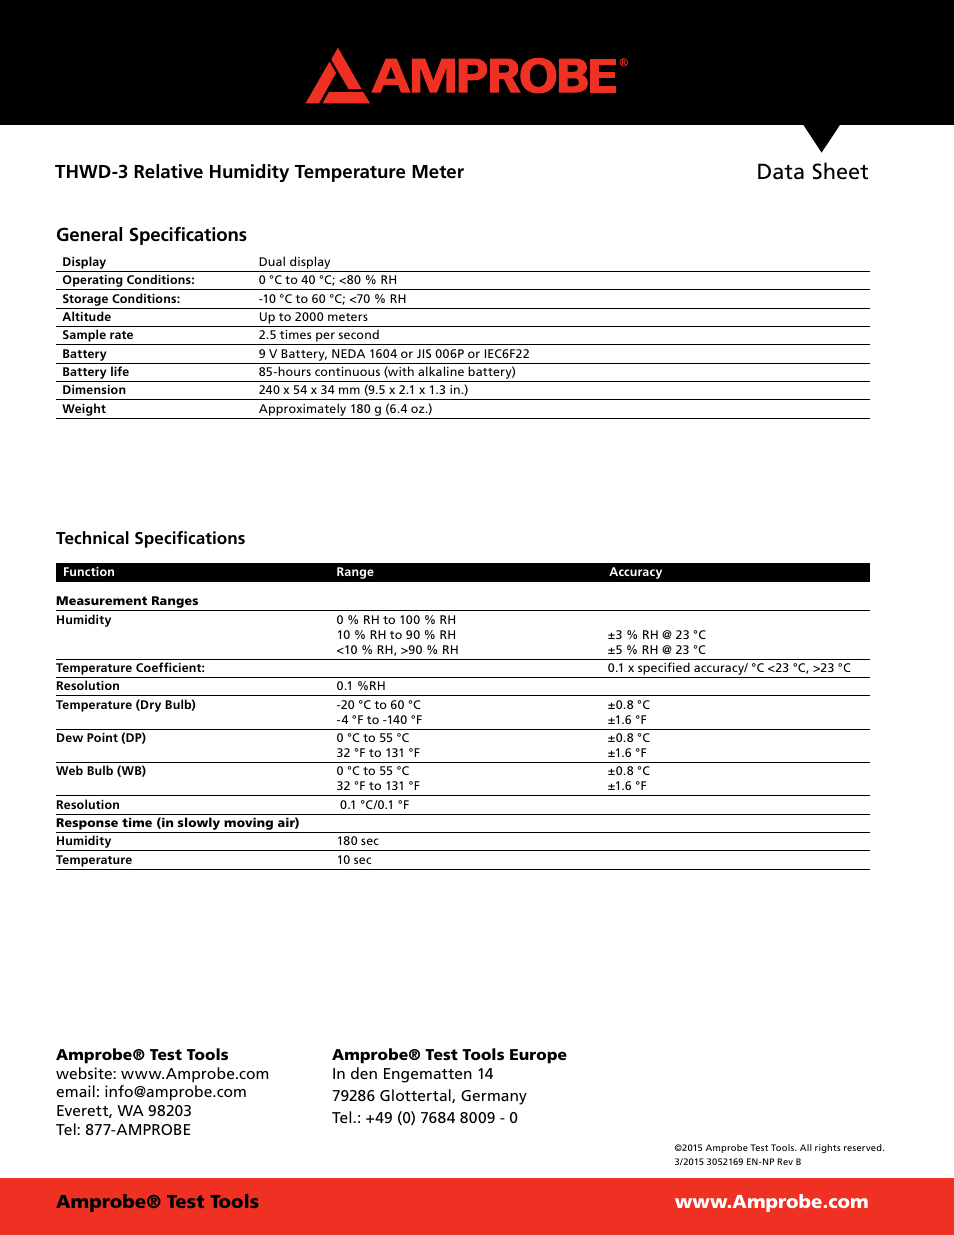 Amprobe THWD-3 Relative Humidity Temperature Meter 